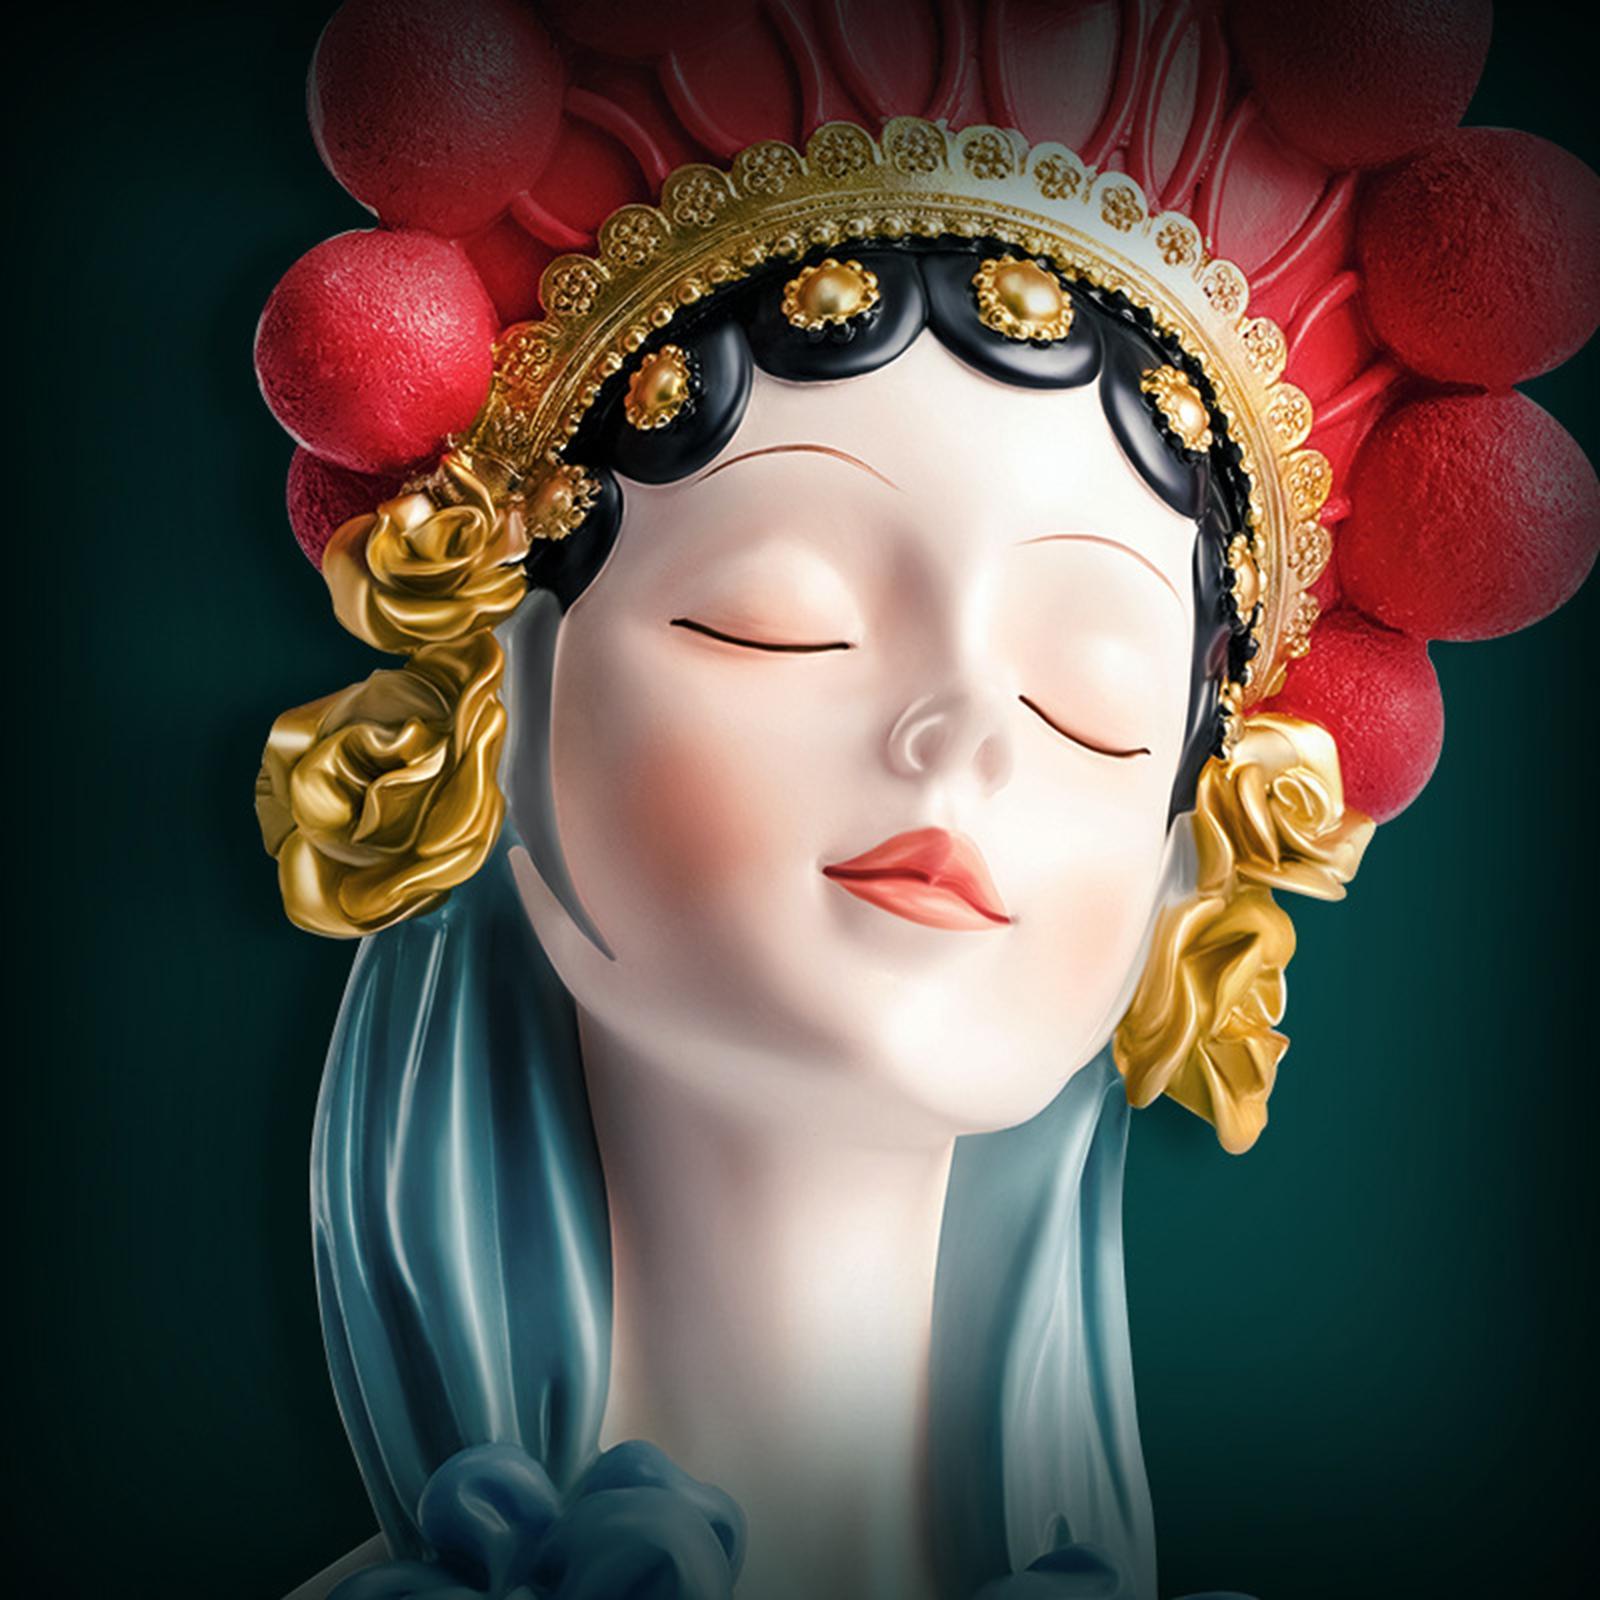 Opera Girls Statue Ornament Handicraft Resin Craft Chinese Traditional Girls Figurine for Office Desktop Bedroom Cabinet Decor